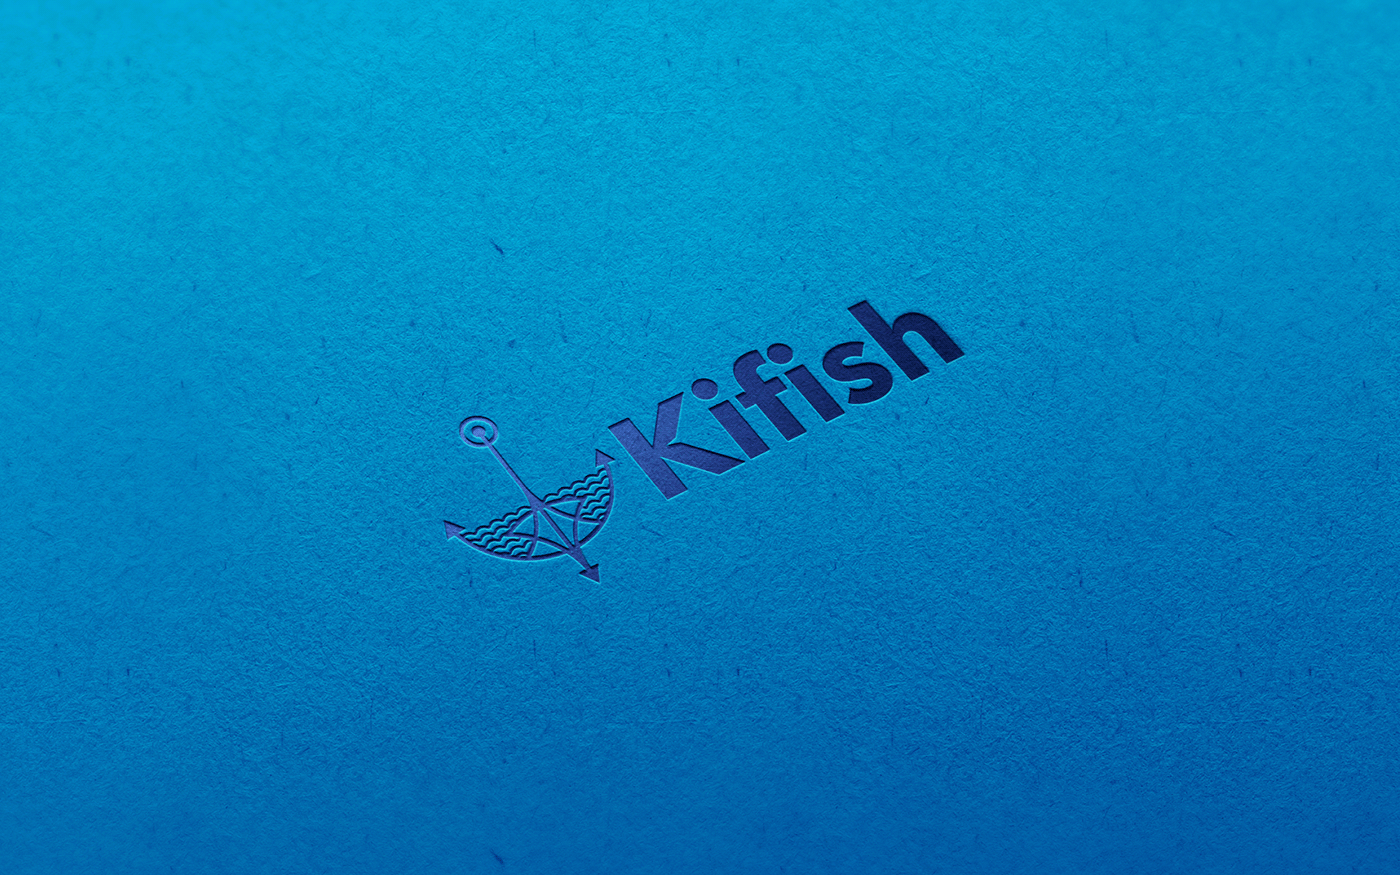 angola brand fish fishing Kifish logo Pesca sea visual identity Zameno